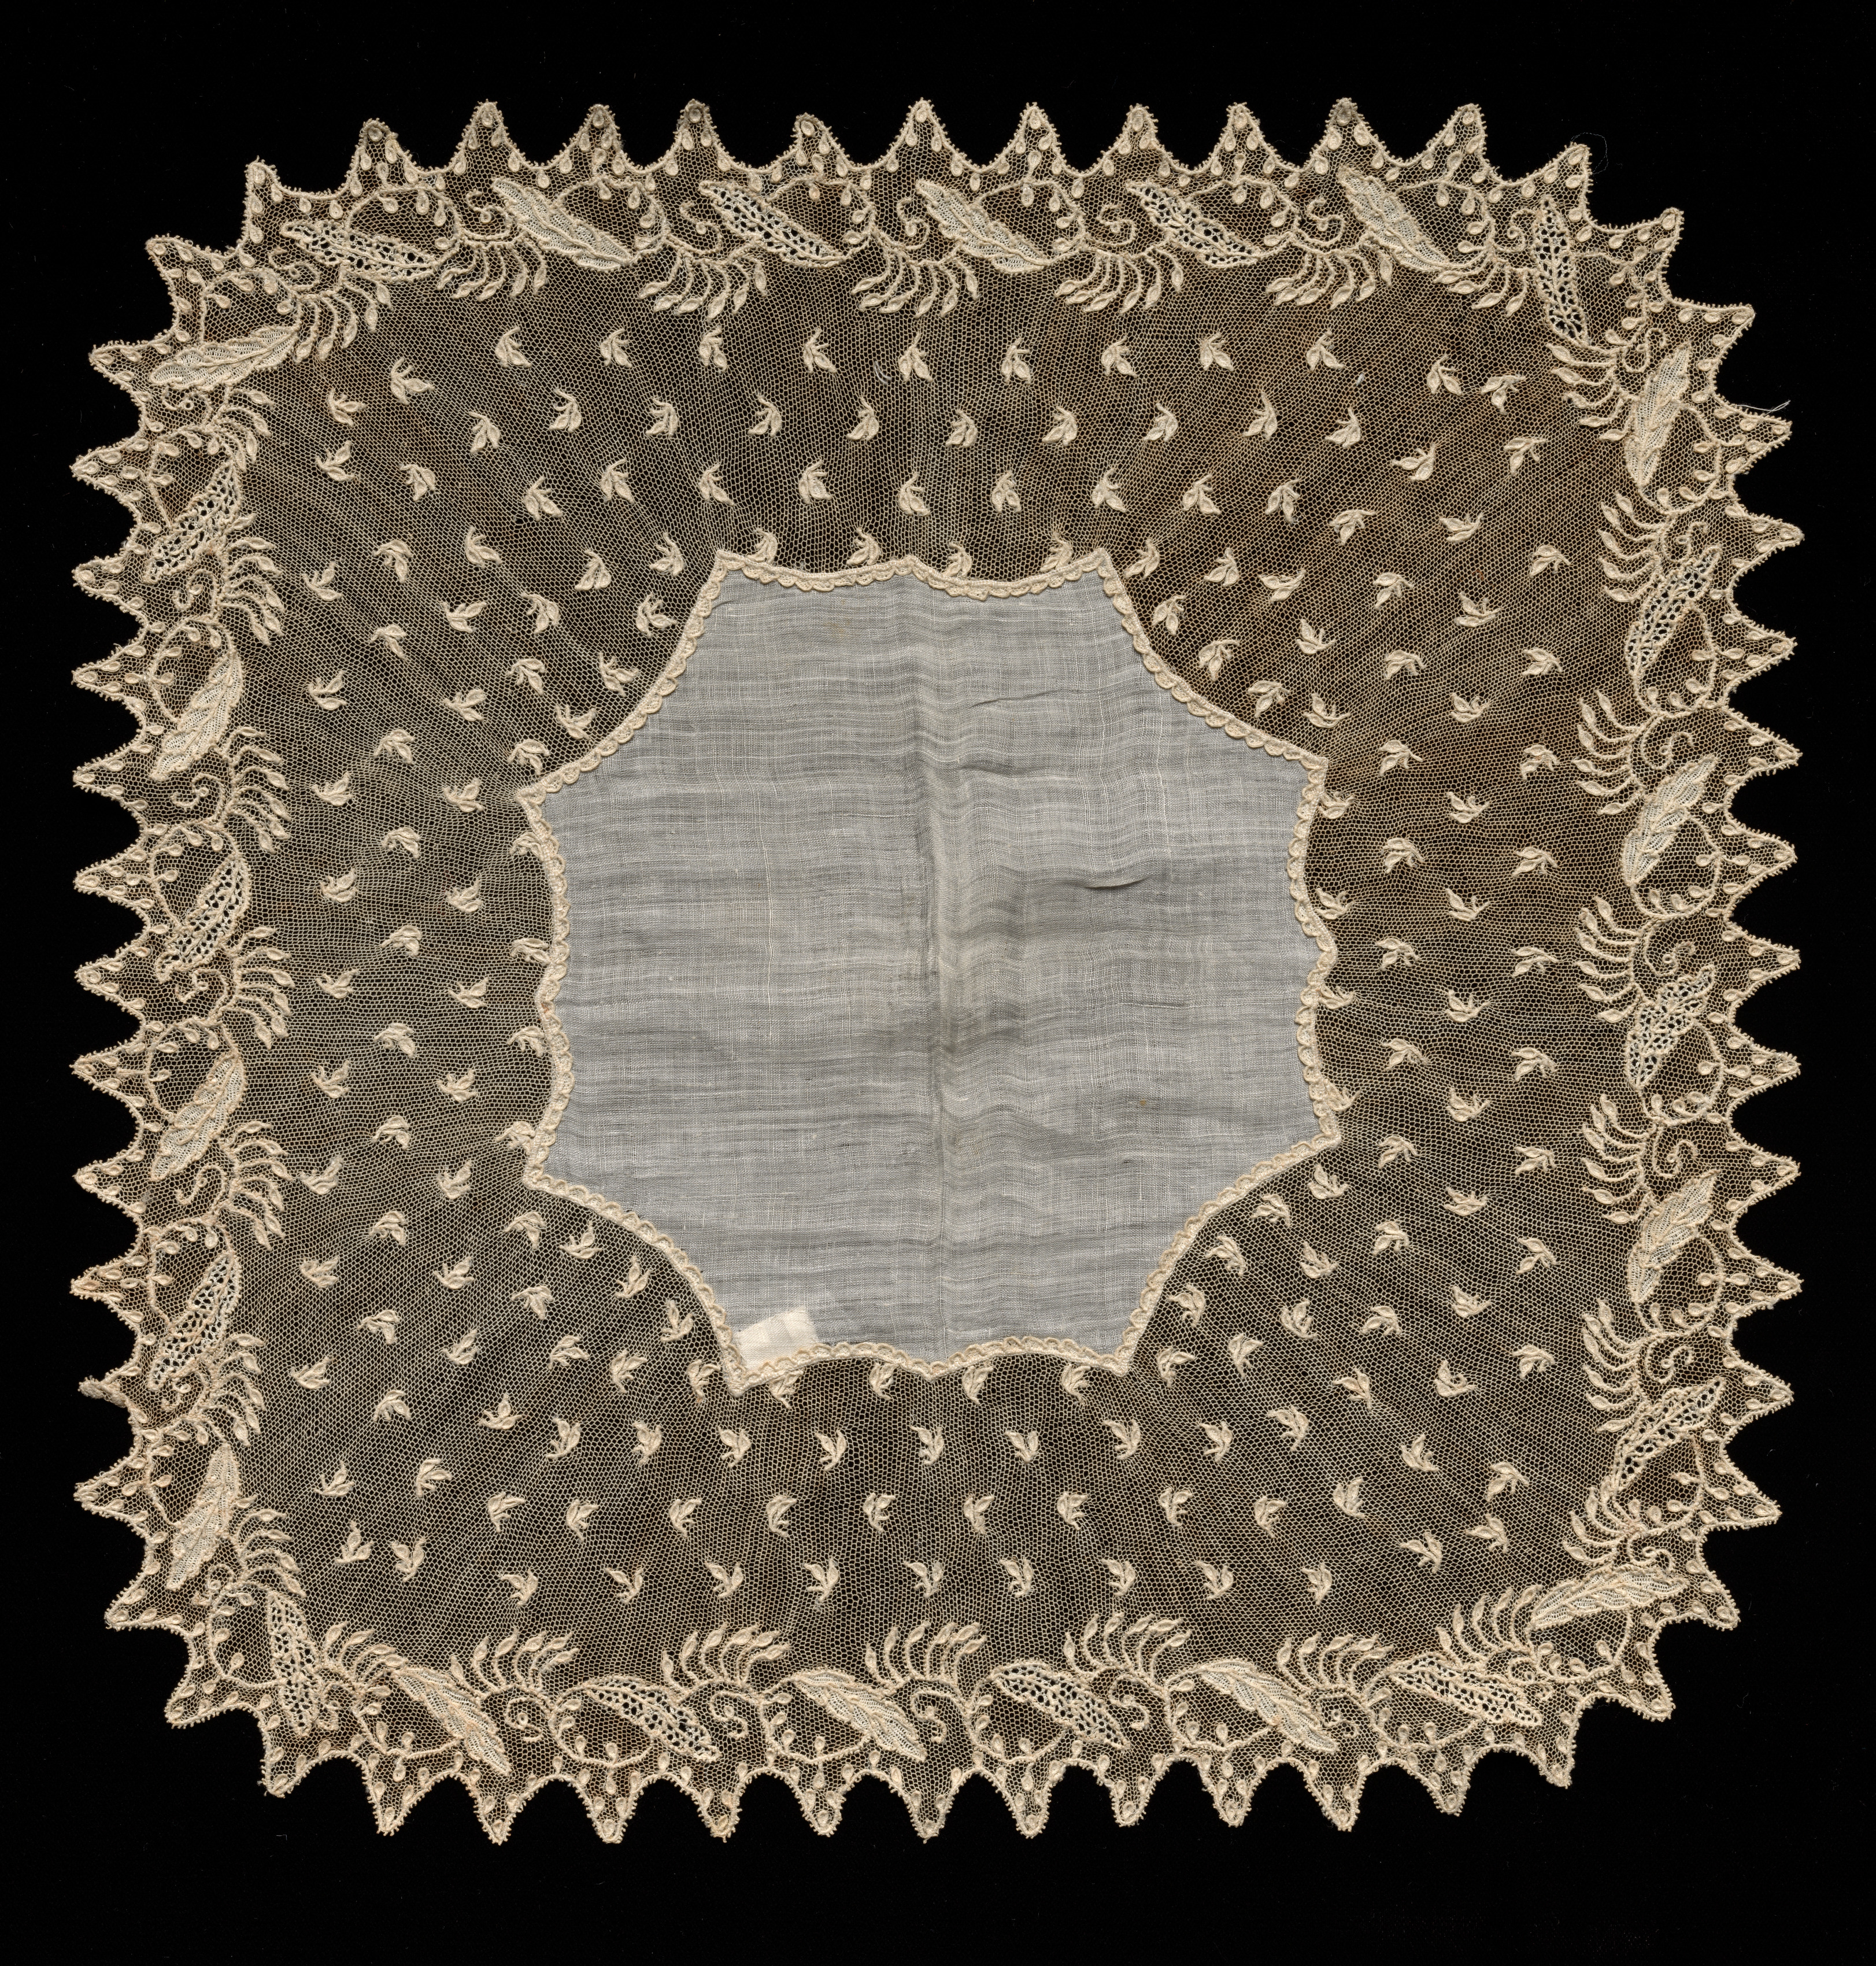 Embroidery and Needlepoint (Point Alençon) Lace Handkerchief